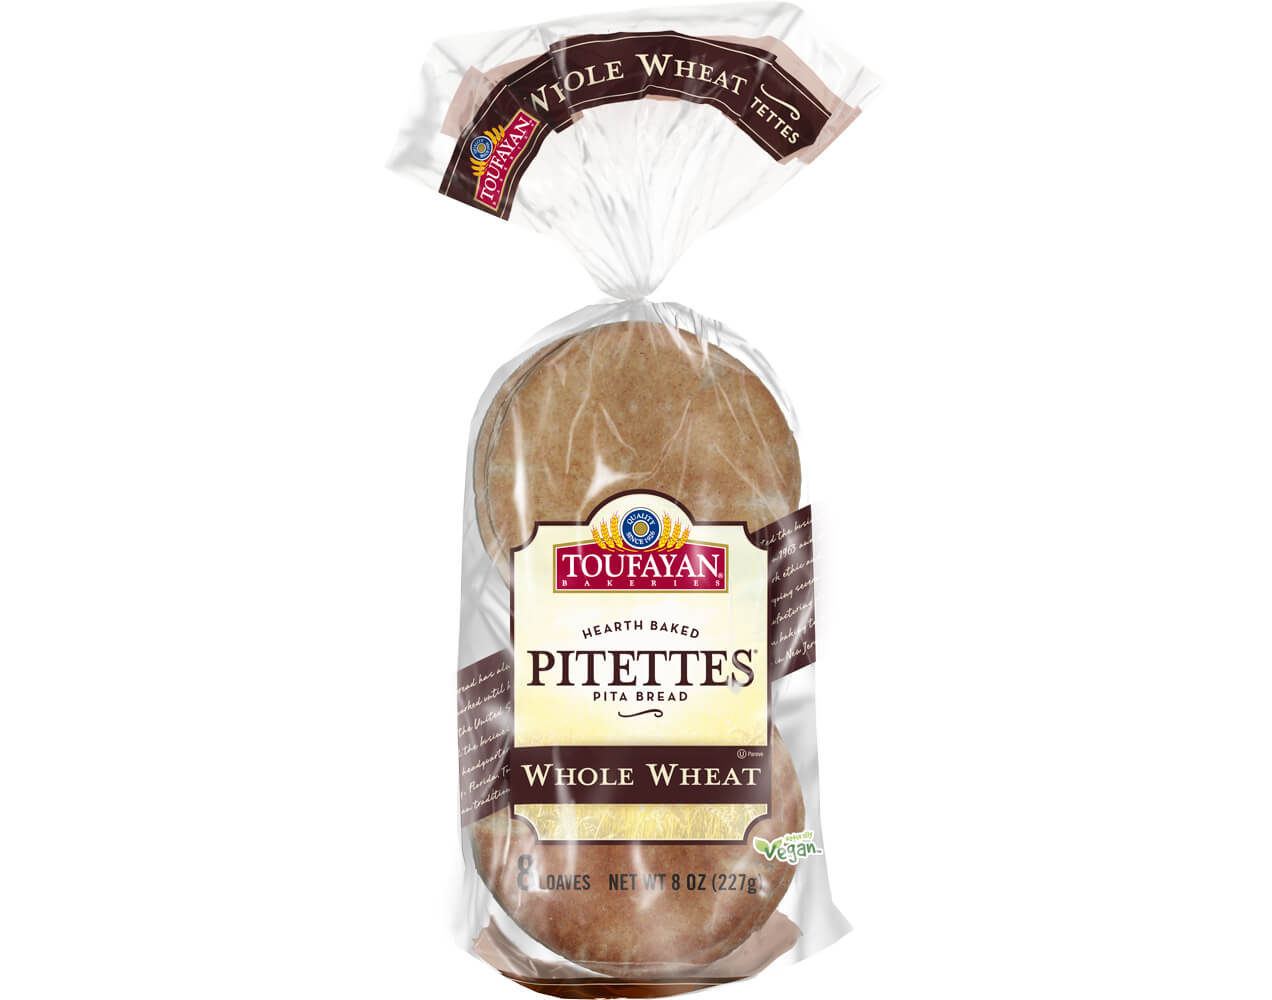 Whole Wheat Pitettes